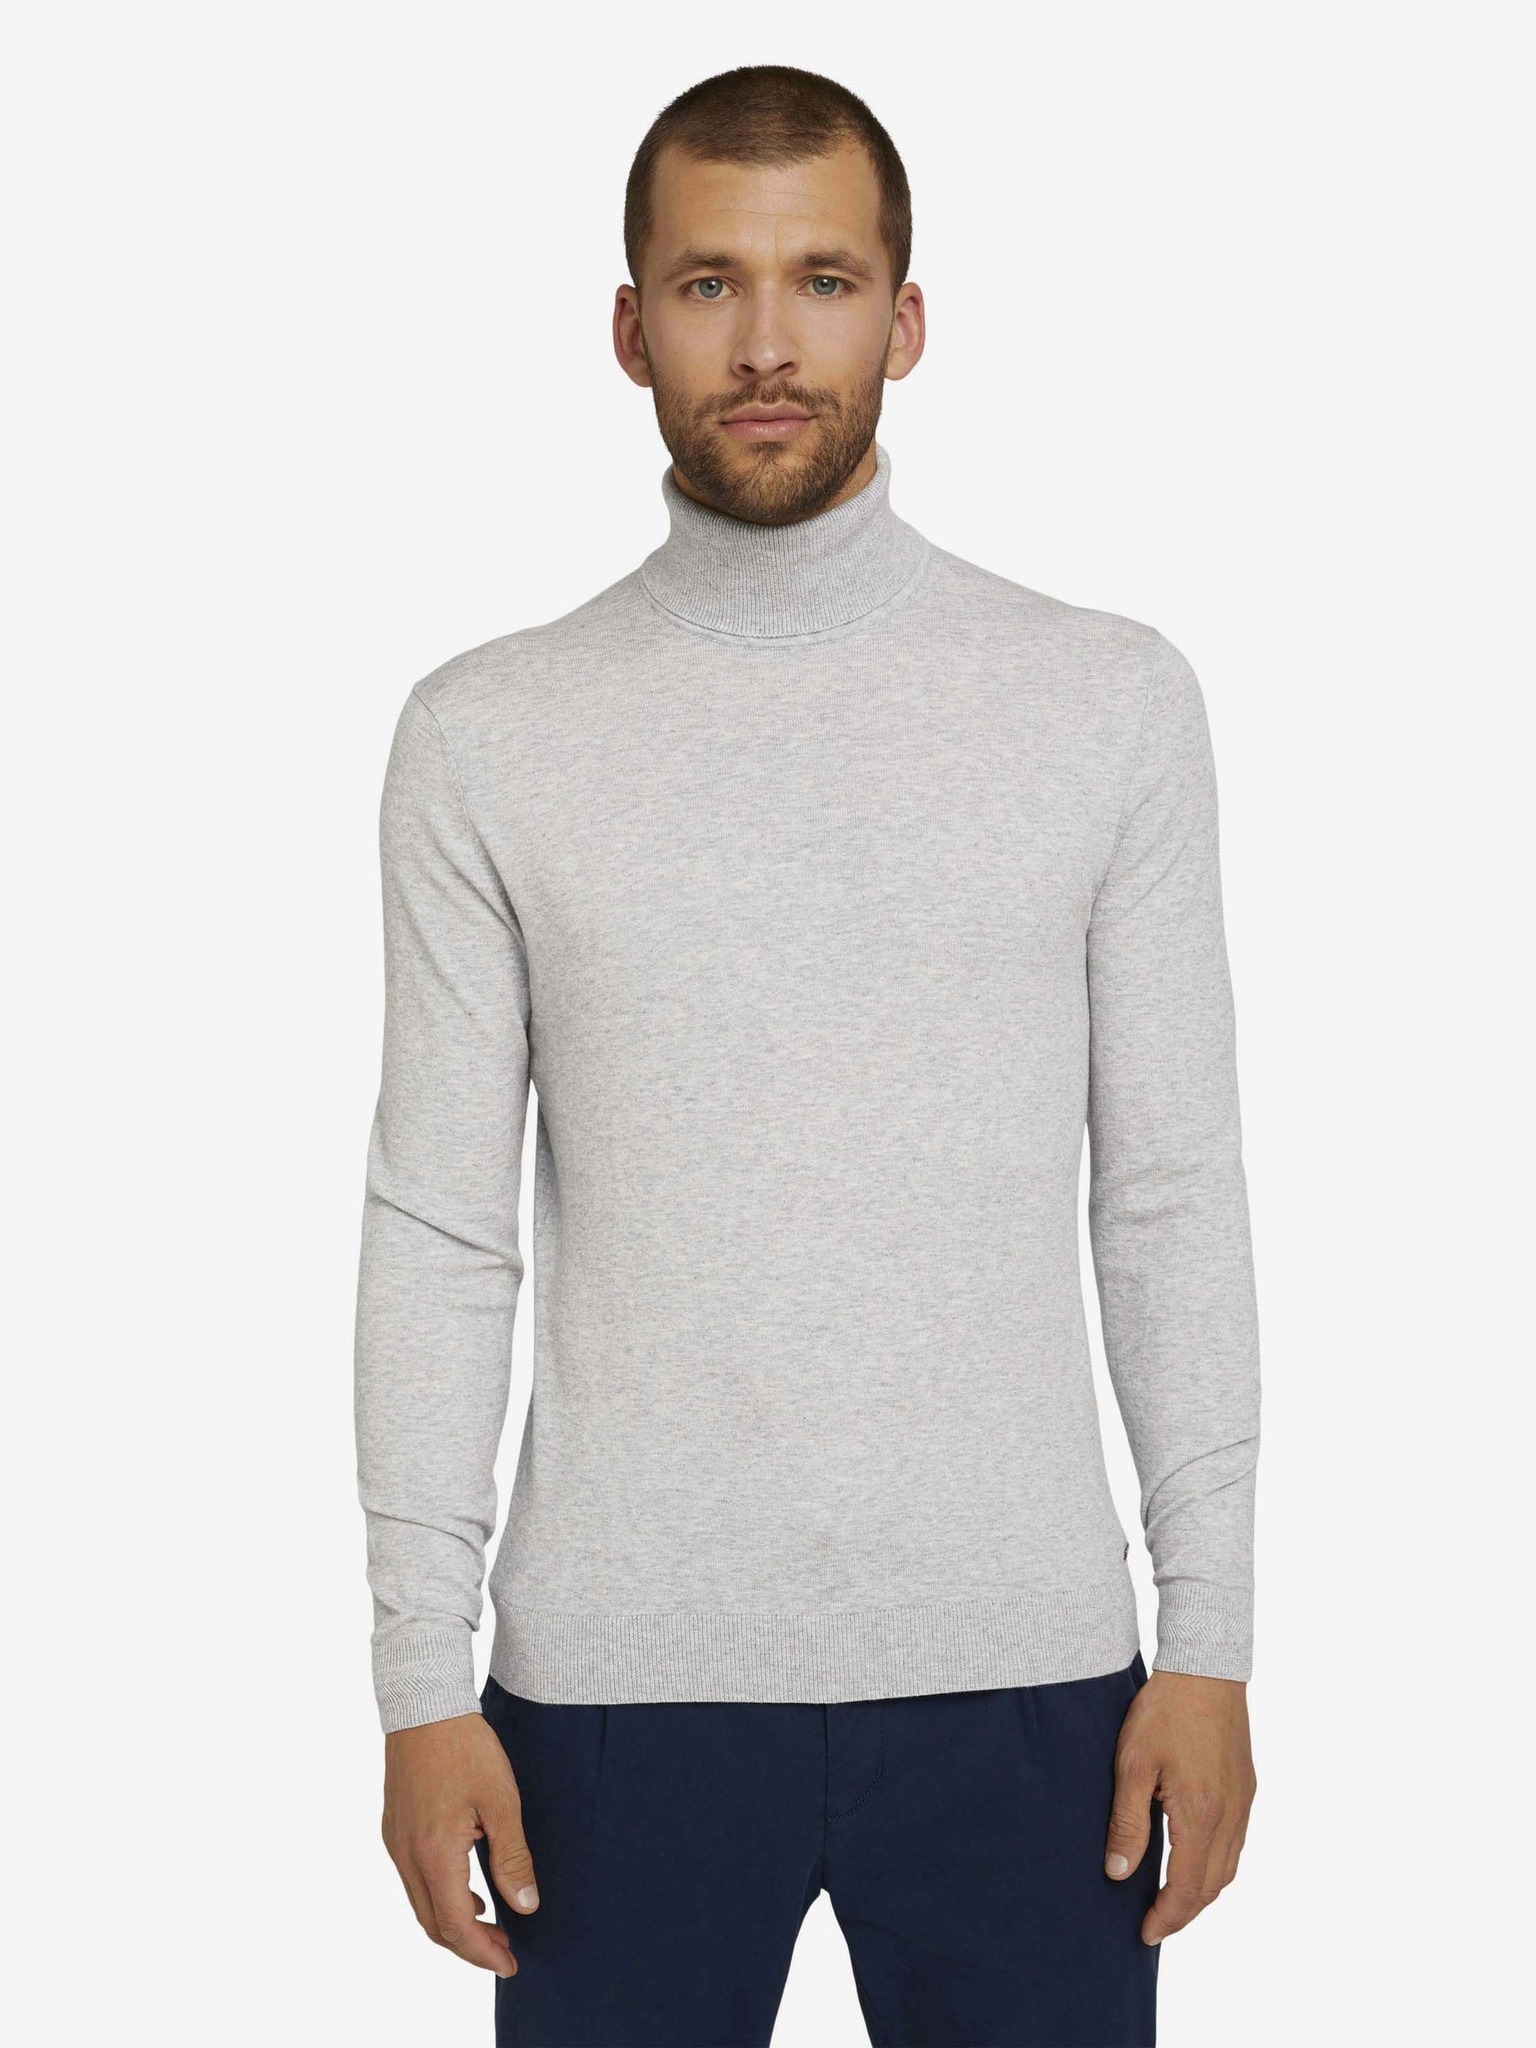 Denim - Tom Sweater Tailor